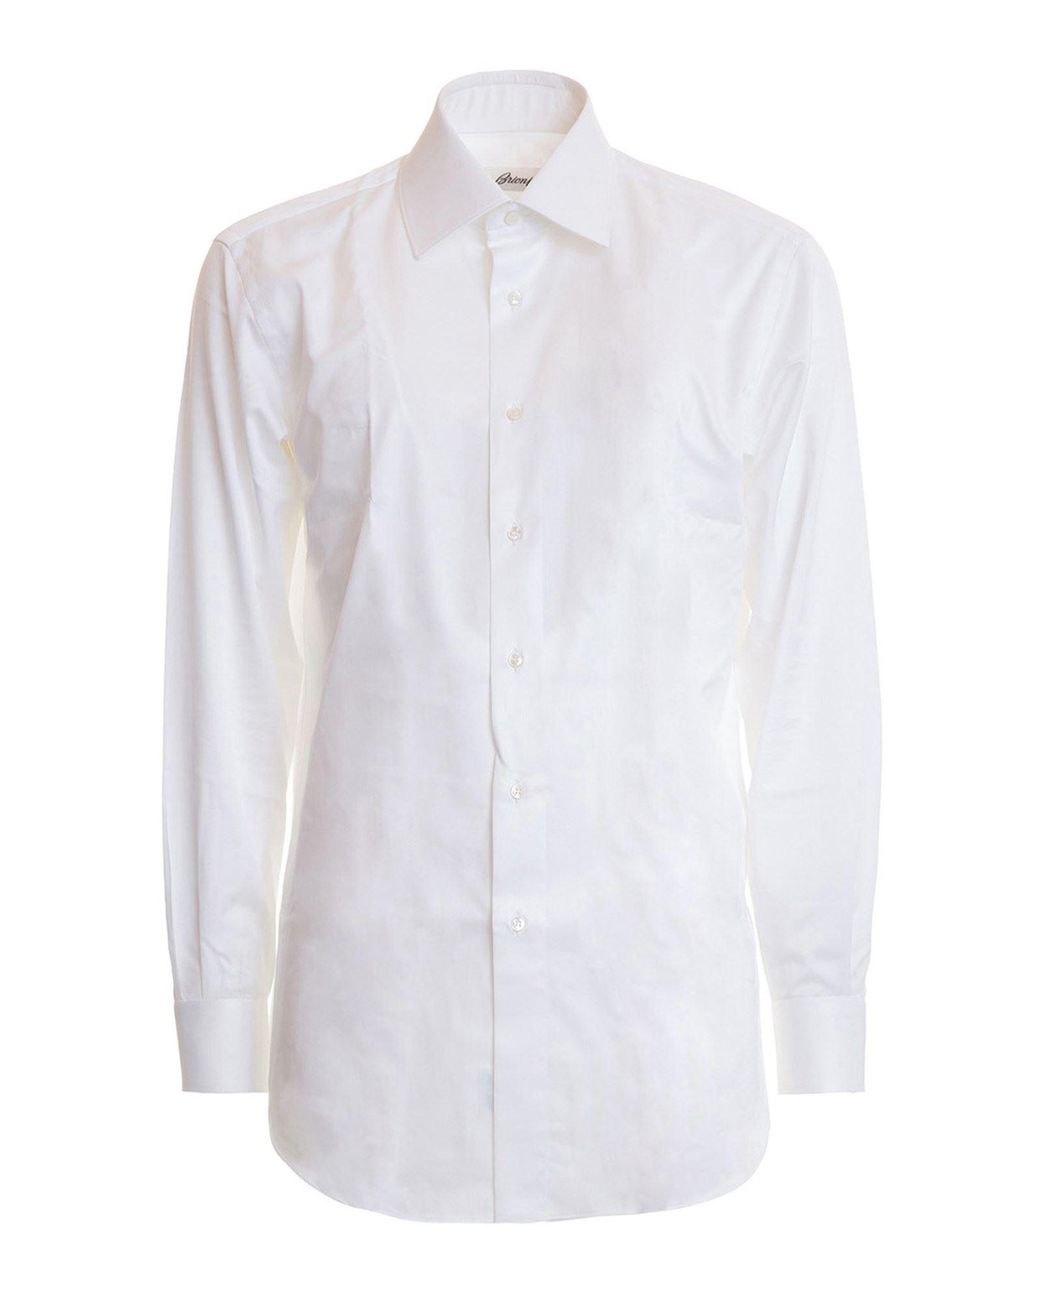 Brioni Cotton Spread Collar Classic Shirt in White for Men - Save 1% - Lyst